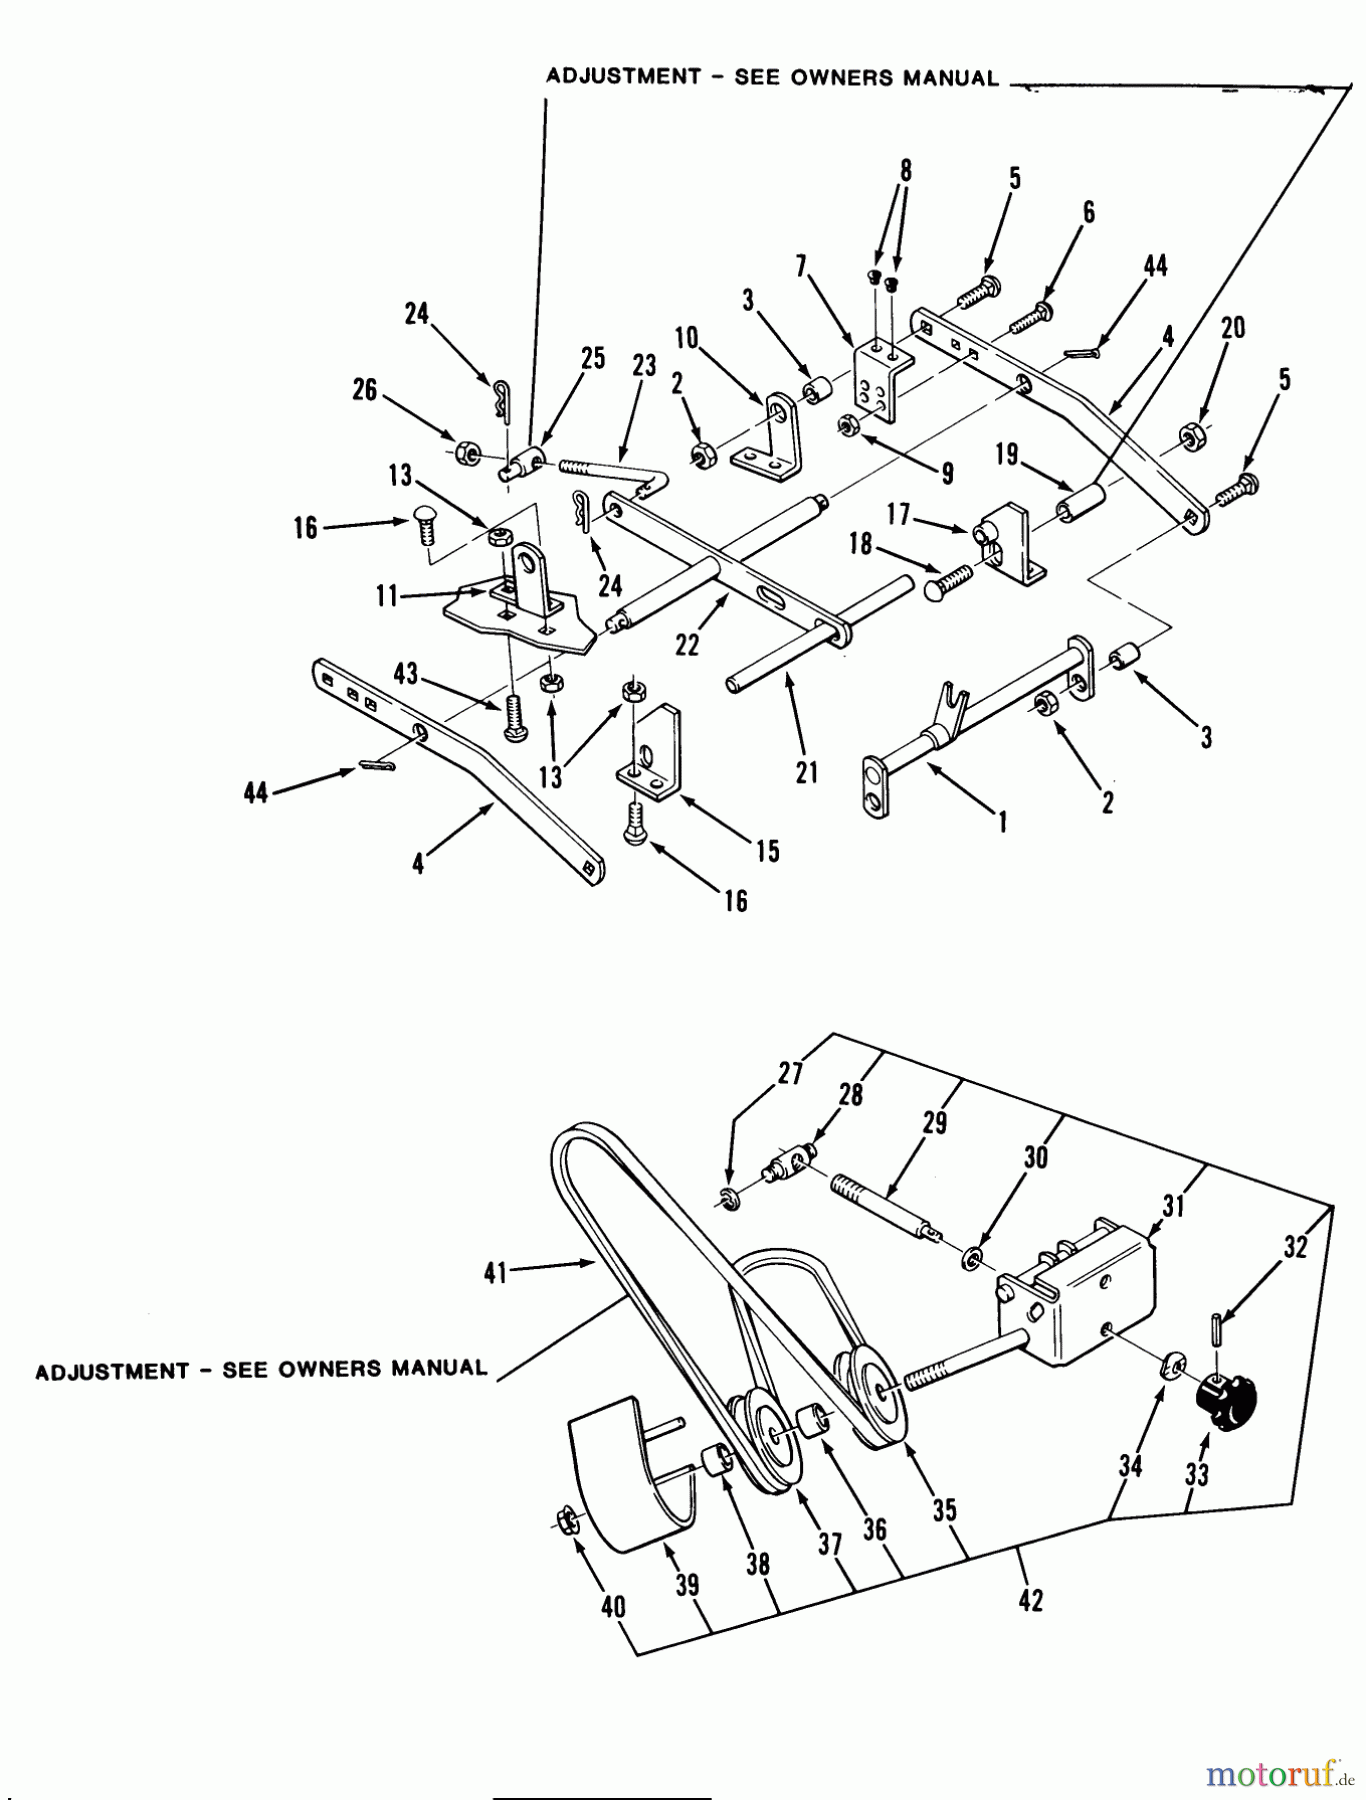  Toro Neu Mowers, Deck Assembly Only 05-37SC01 - Toro 37